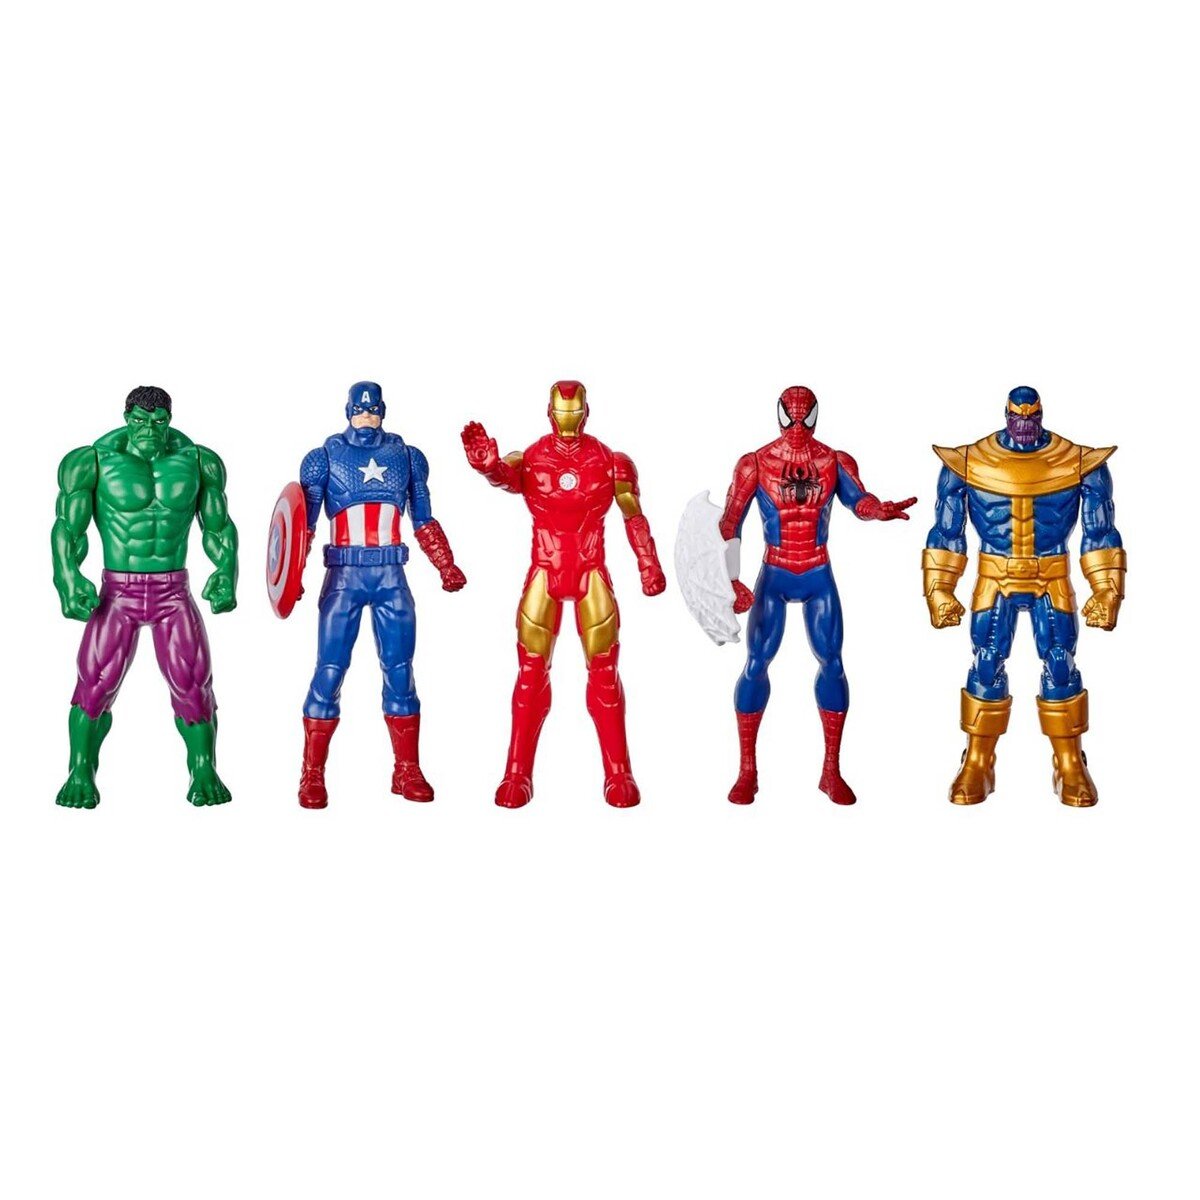 Marvel Action Figure 5-Pack, 6-inch Figures, Iron Man, Spider-Man, Captain America, Hulk, Thanos